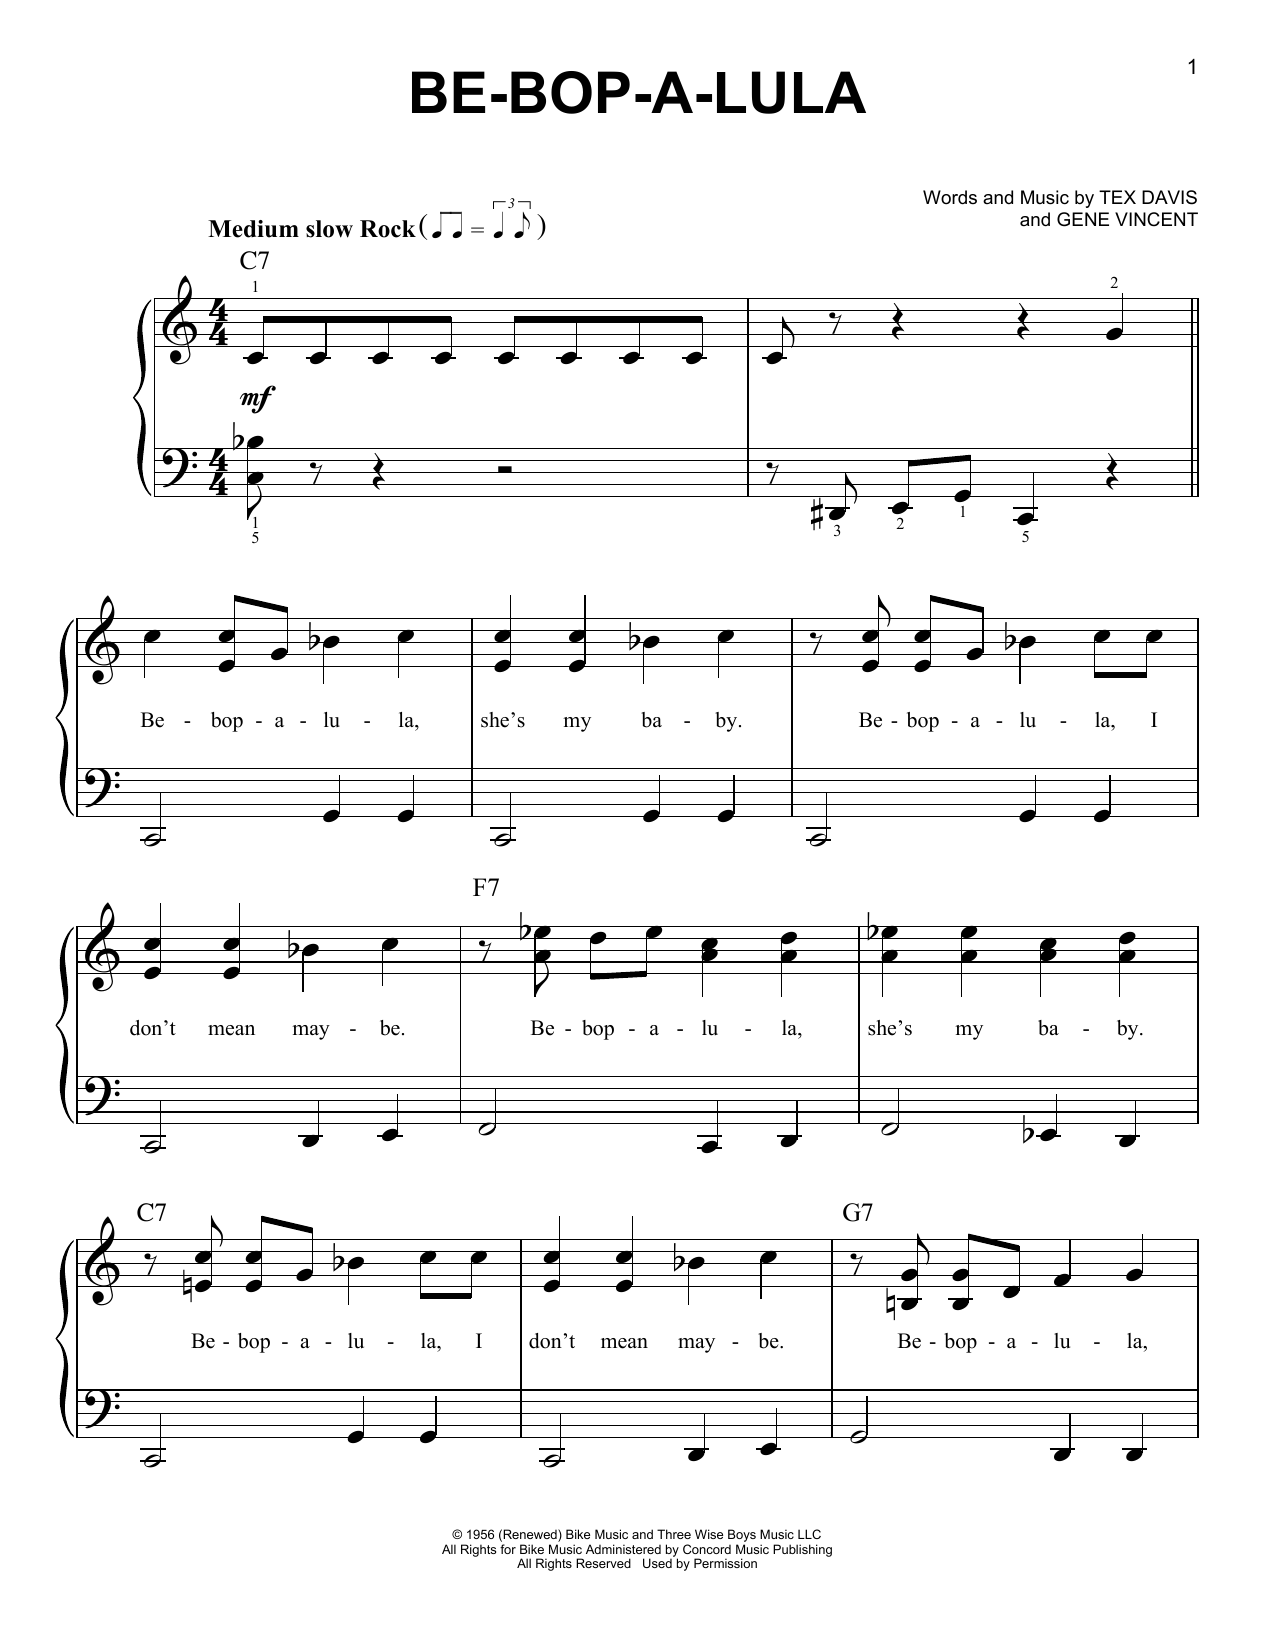 Gene Vincent Be-Bop-A-Lula Sheet Music Notes & Chords for Melody Line, Lyrics & Chords - Download or Print PDF